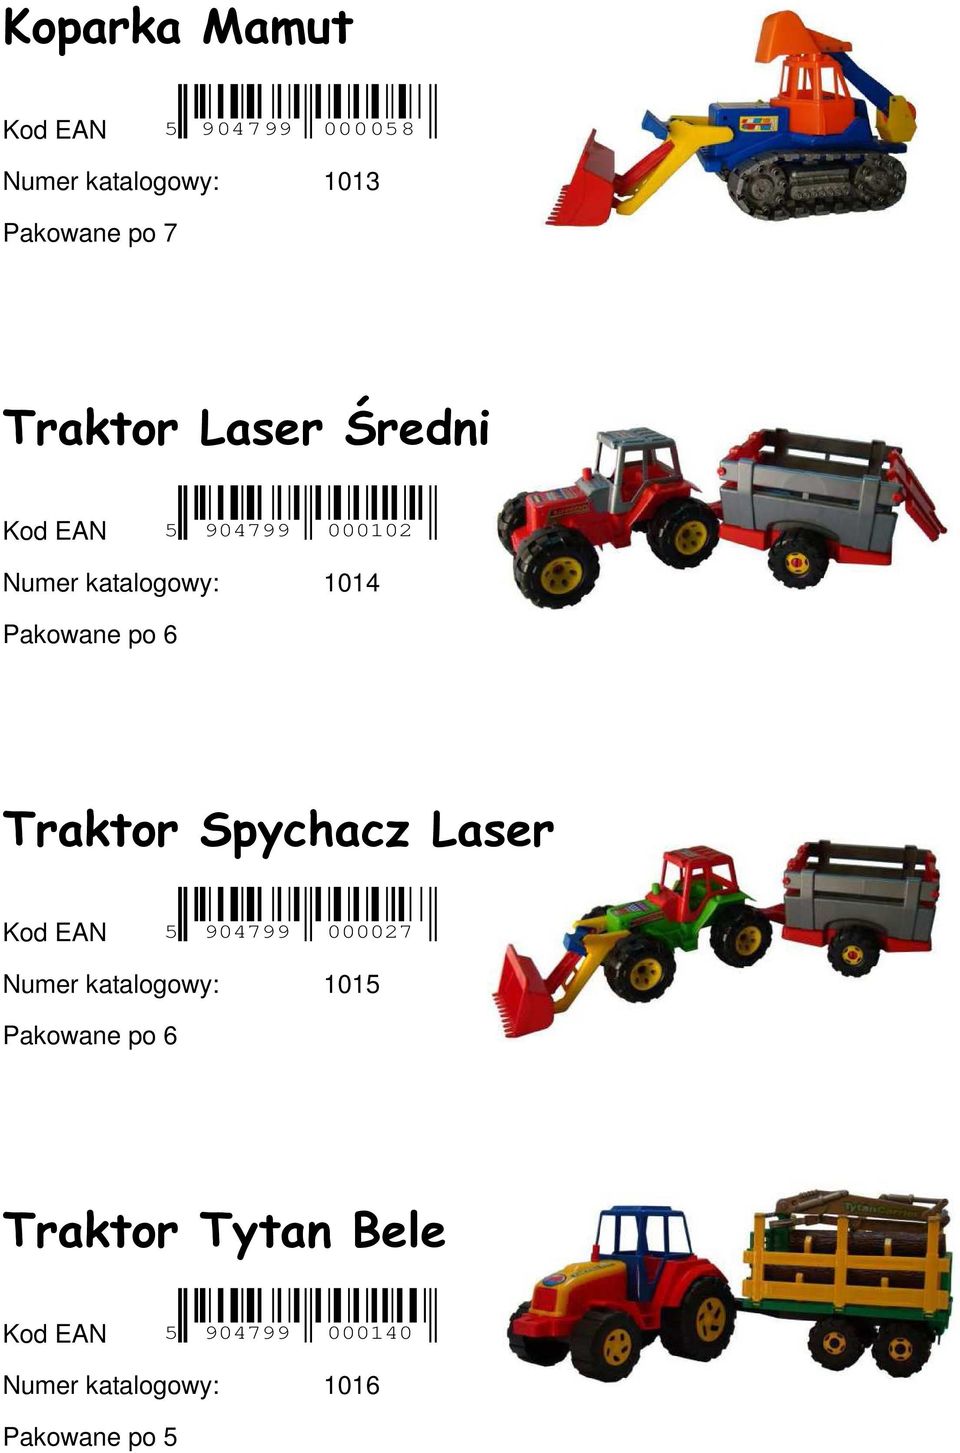 6 Traktor Spychacz Laser Kod EAN 5 904799 000027 Numer katalogowy: 1015